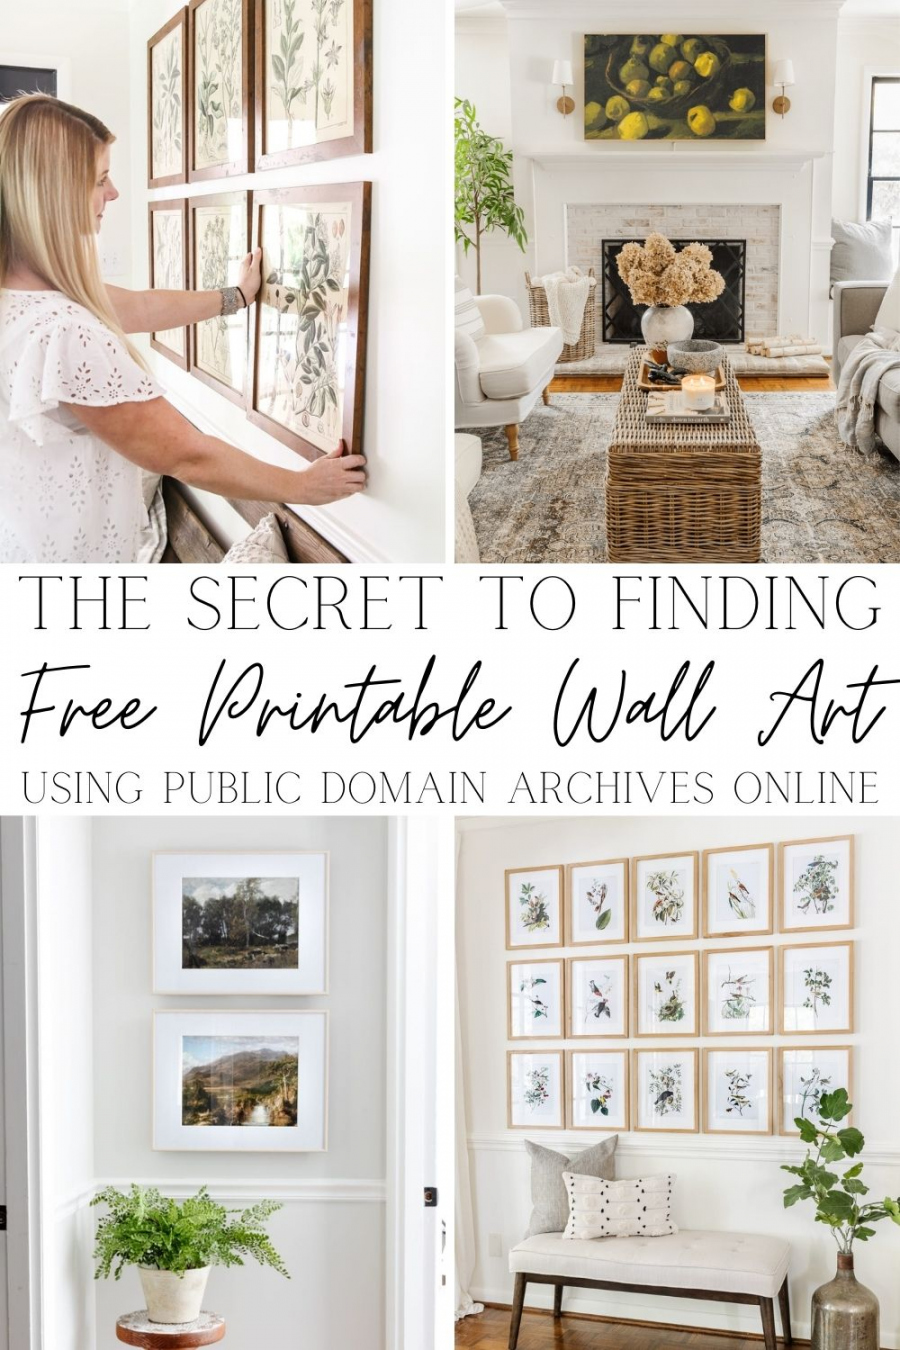 Free Printable Wall Art - Printable - The Secret to Find Free Printable Wall Art Online - Bless